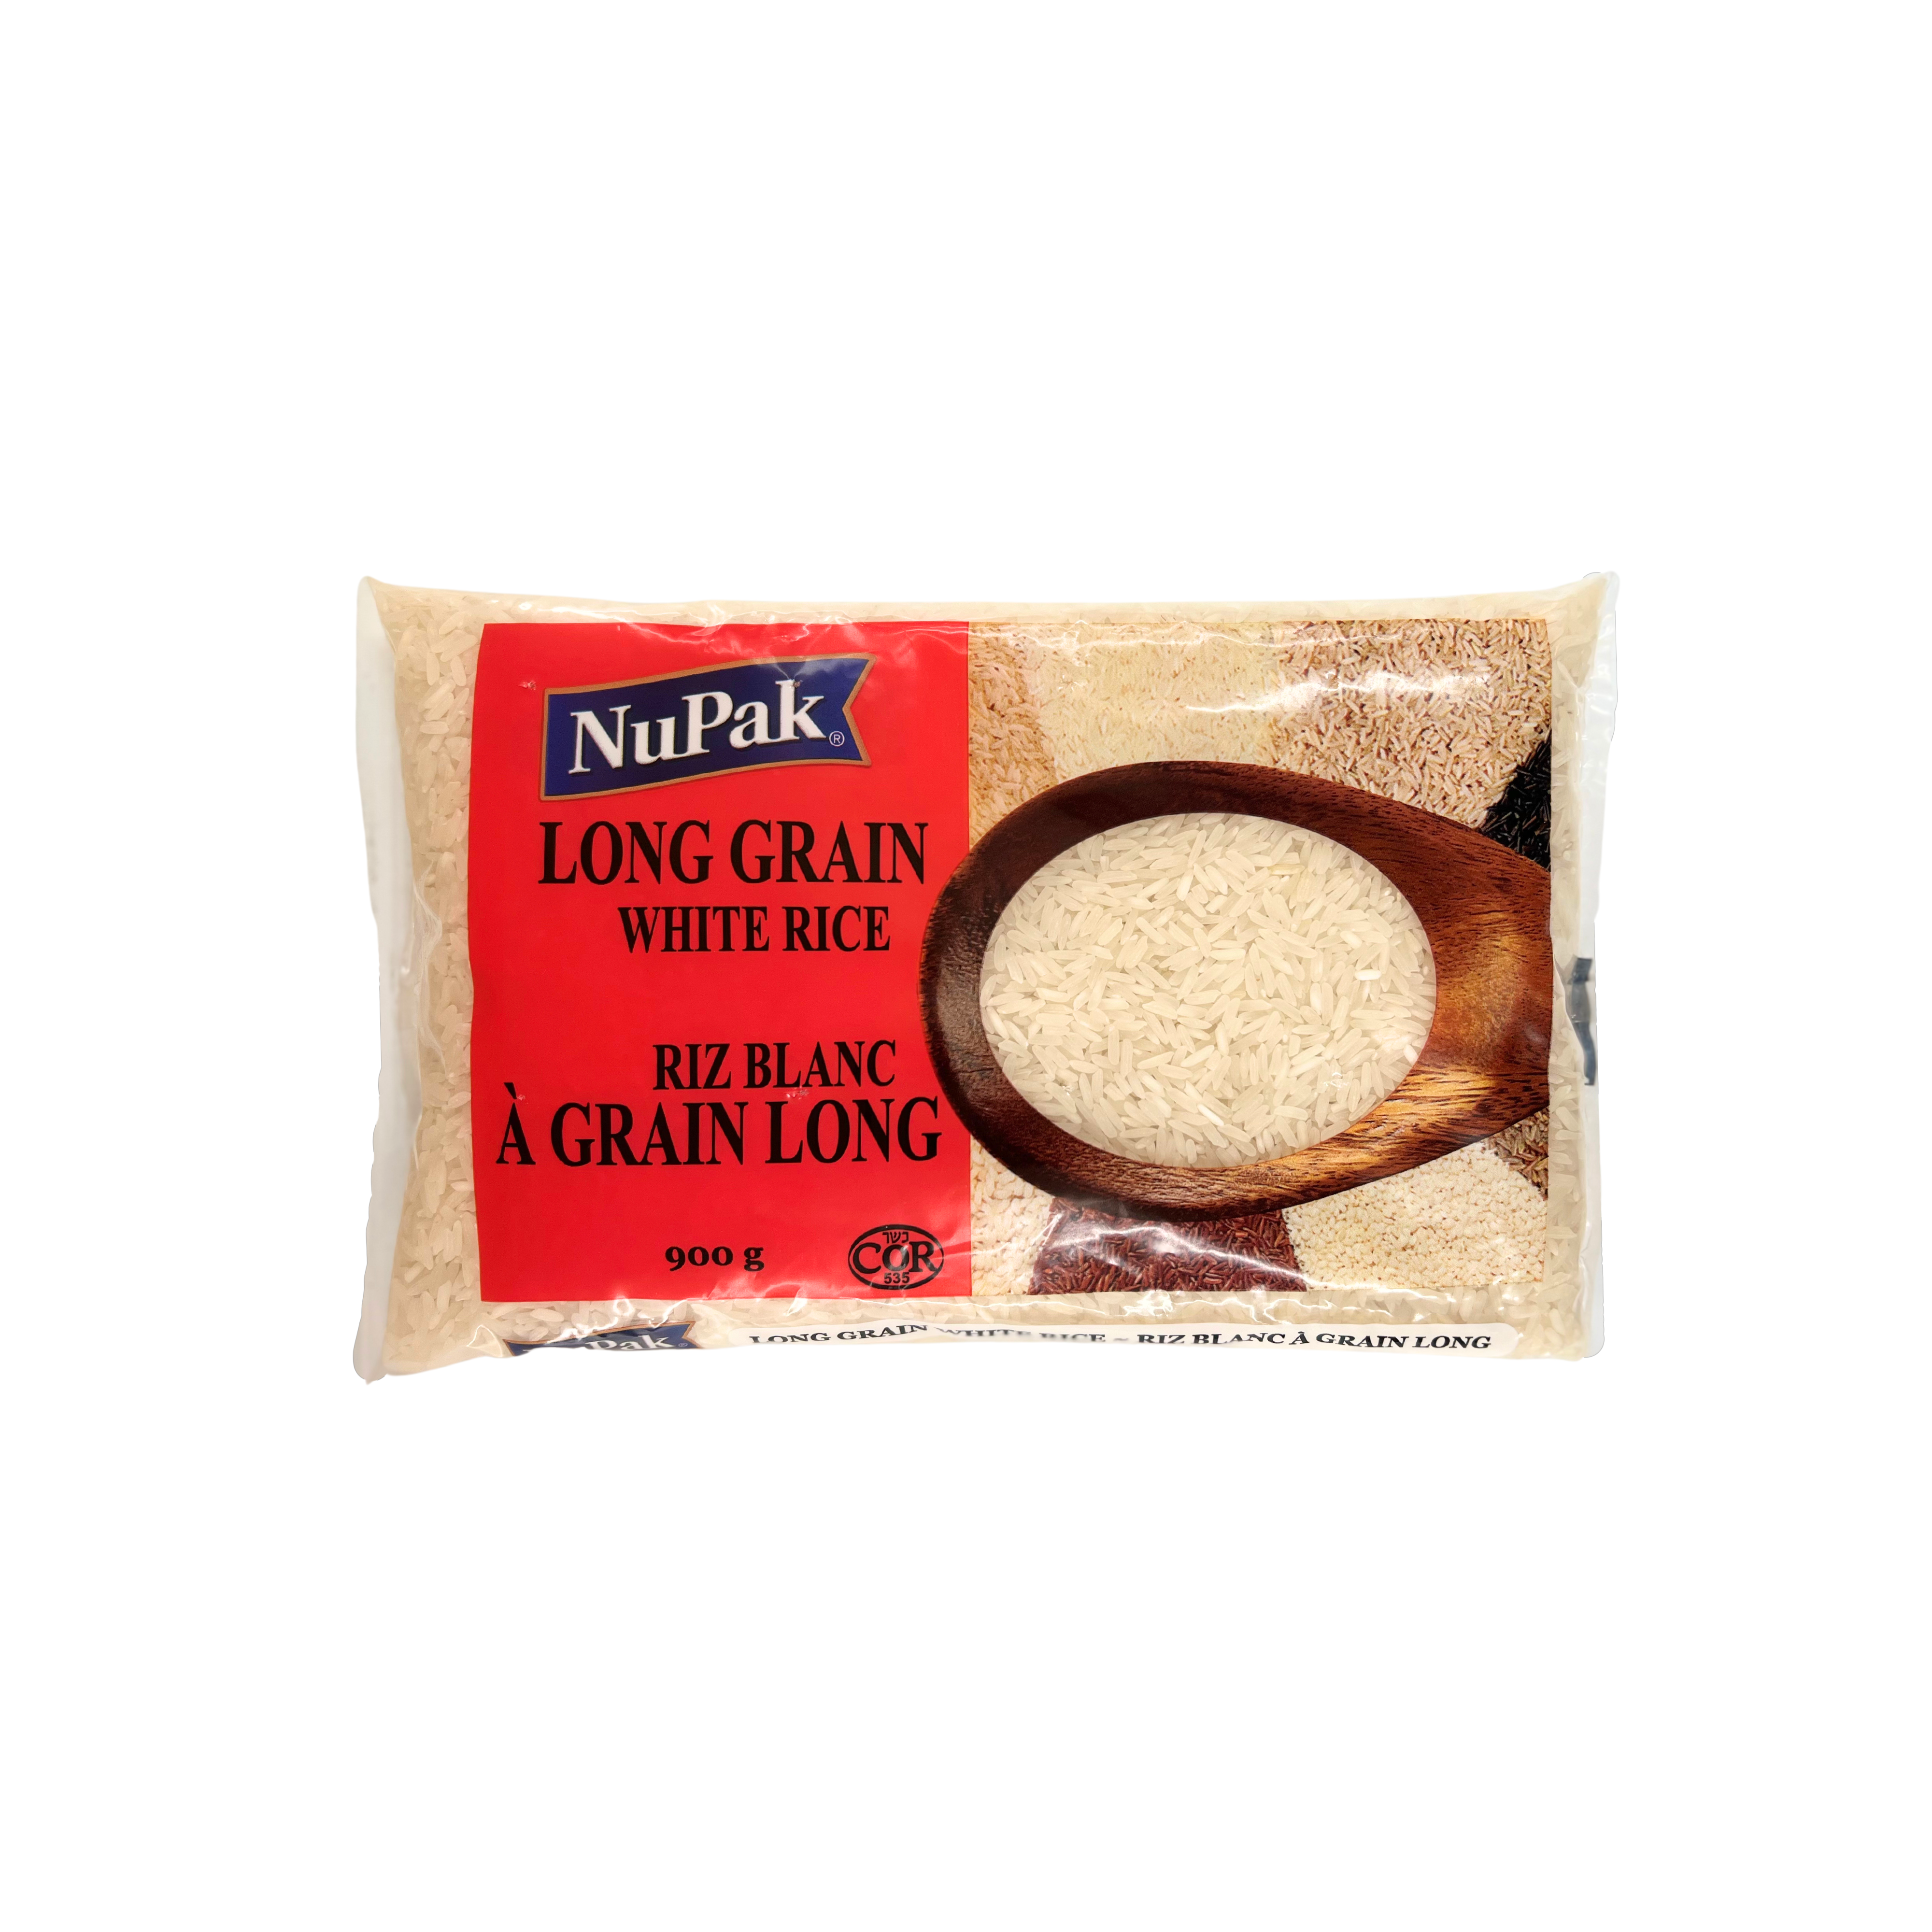 Nupak White Rice 900g